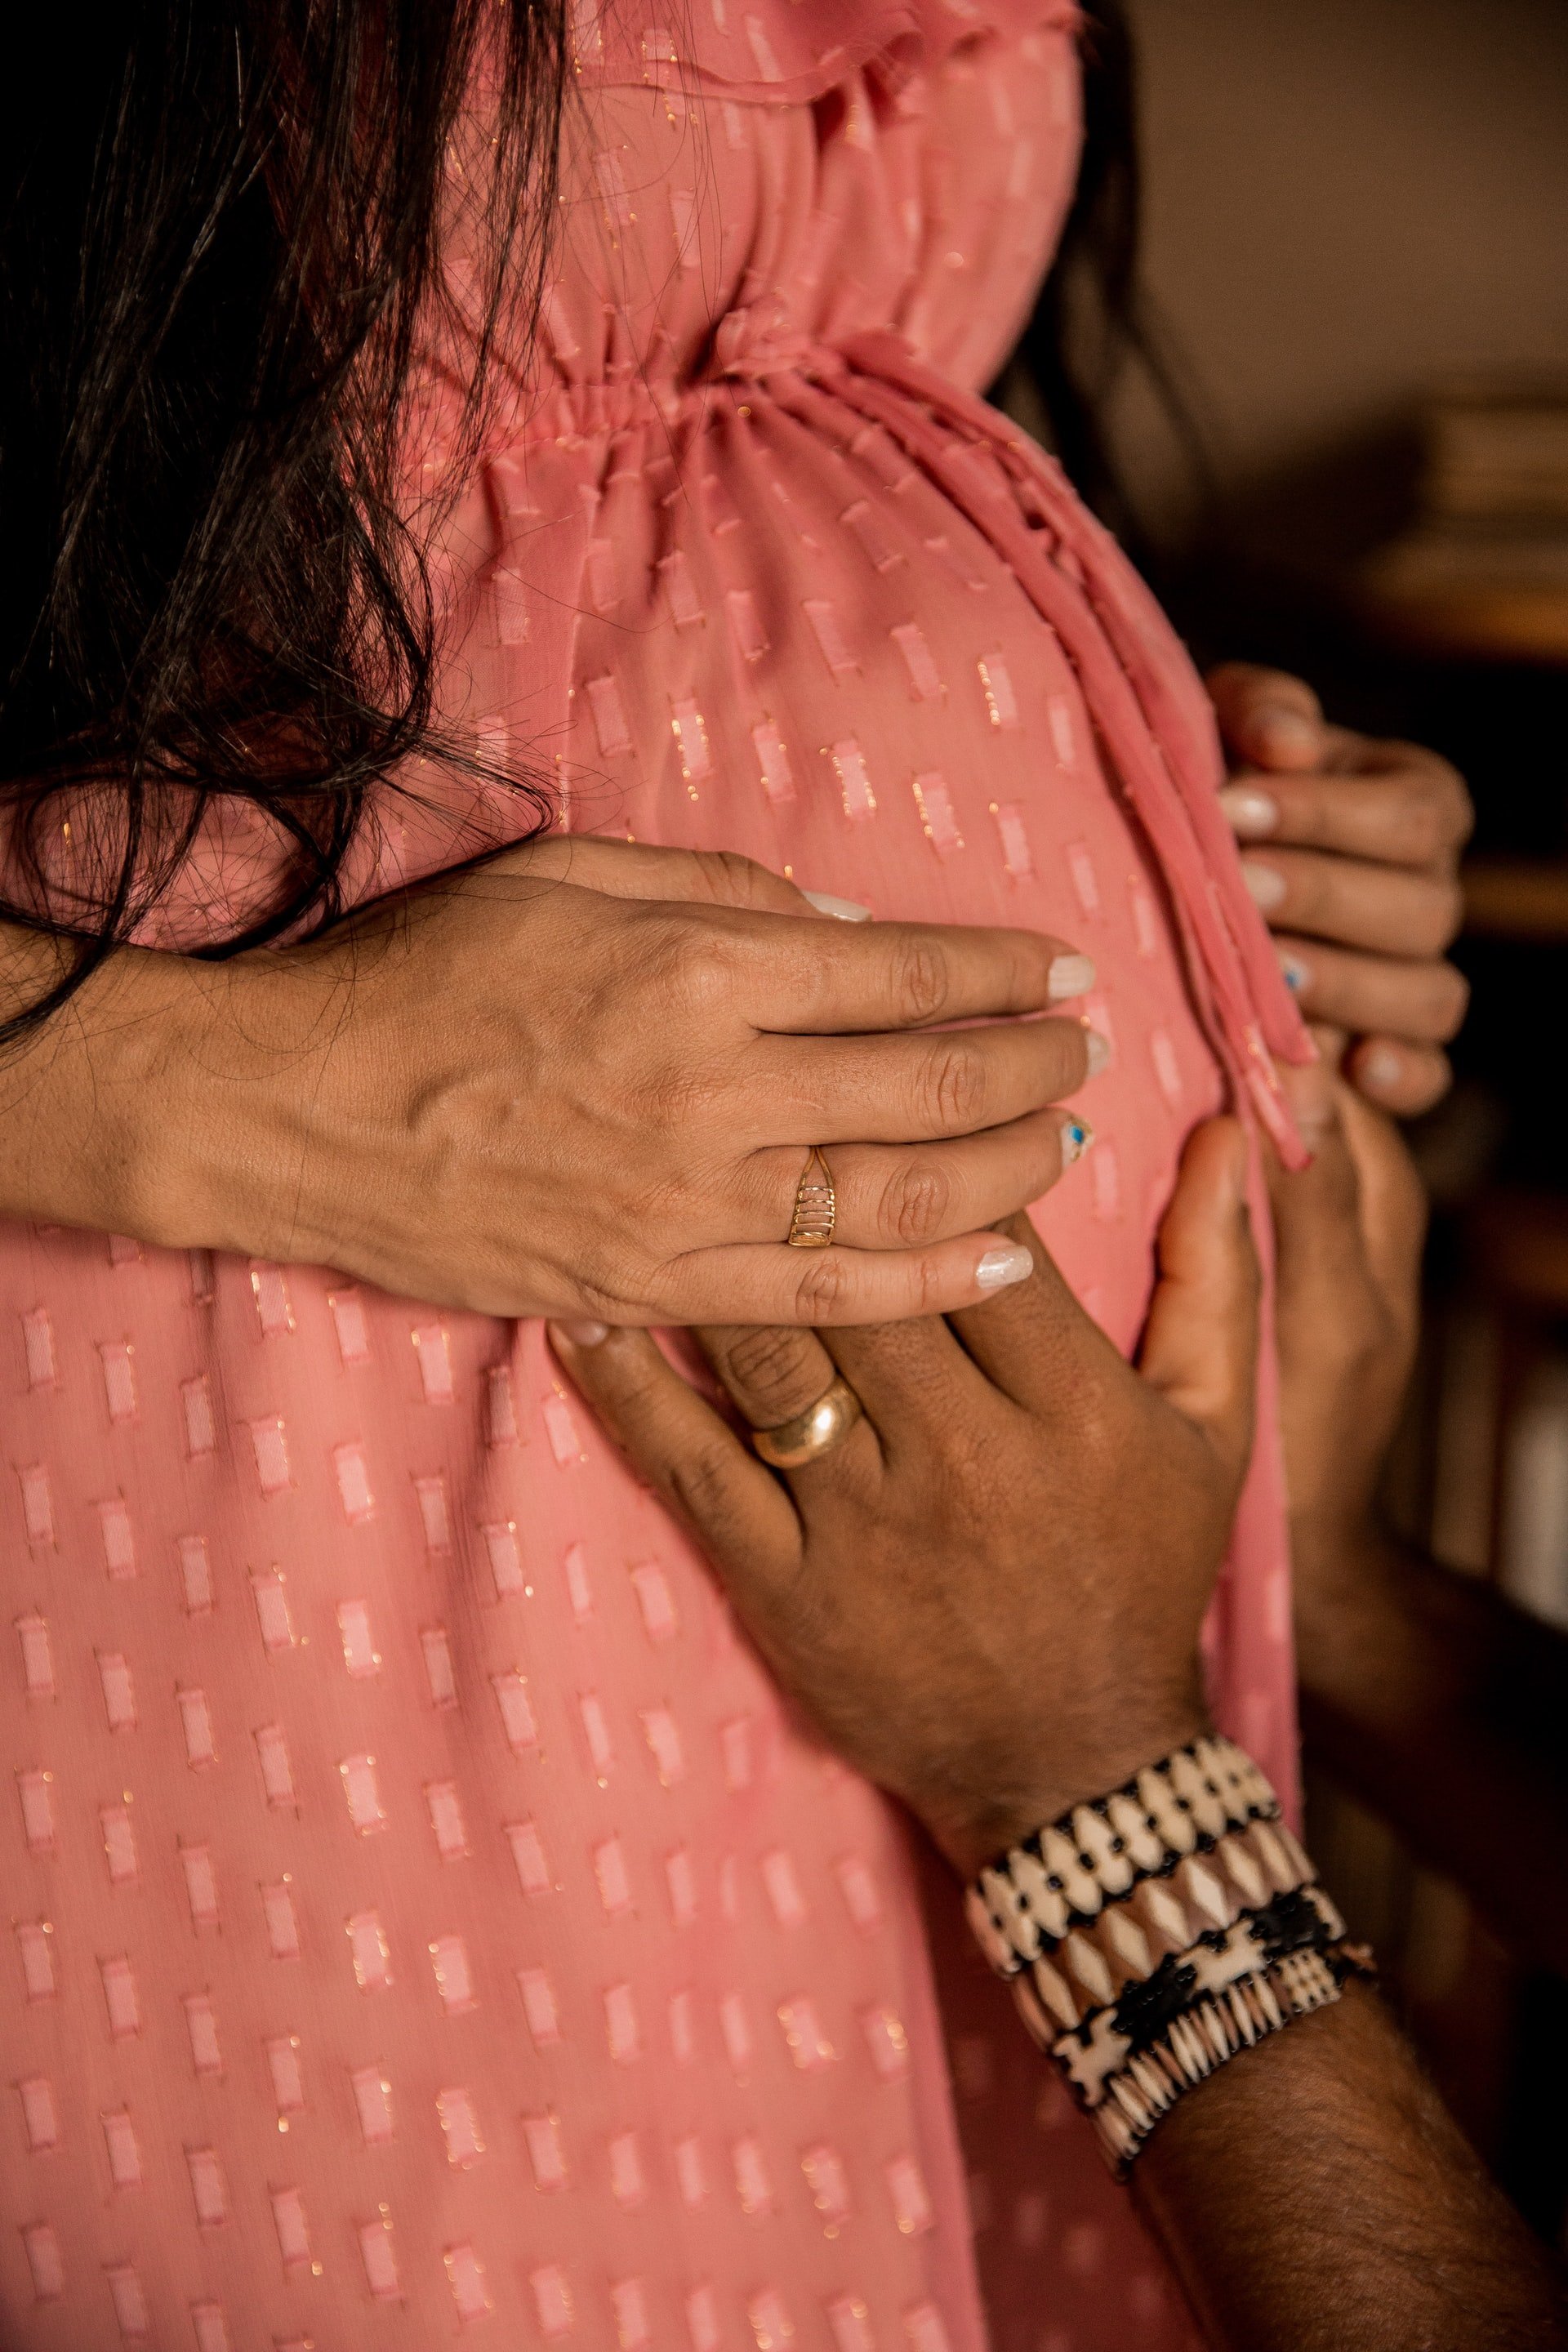 Person touching woman's baby bump | Source: Unsplash